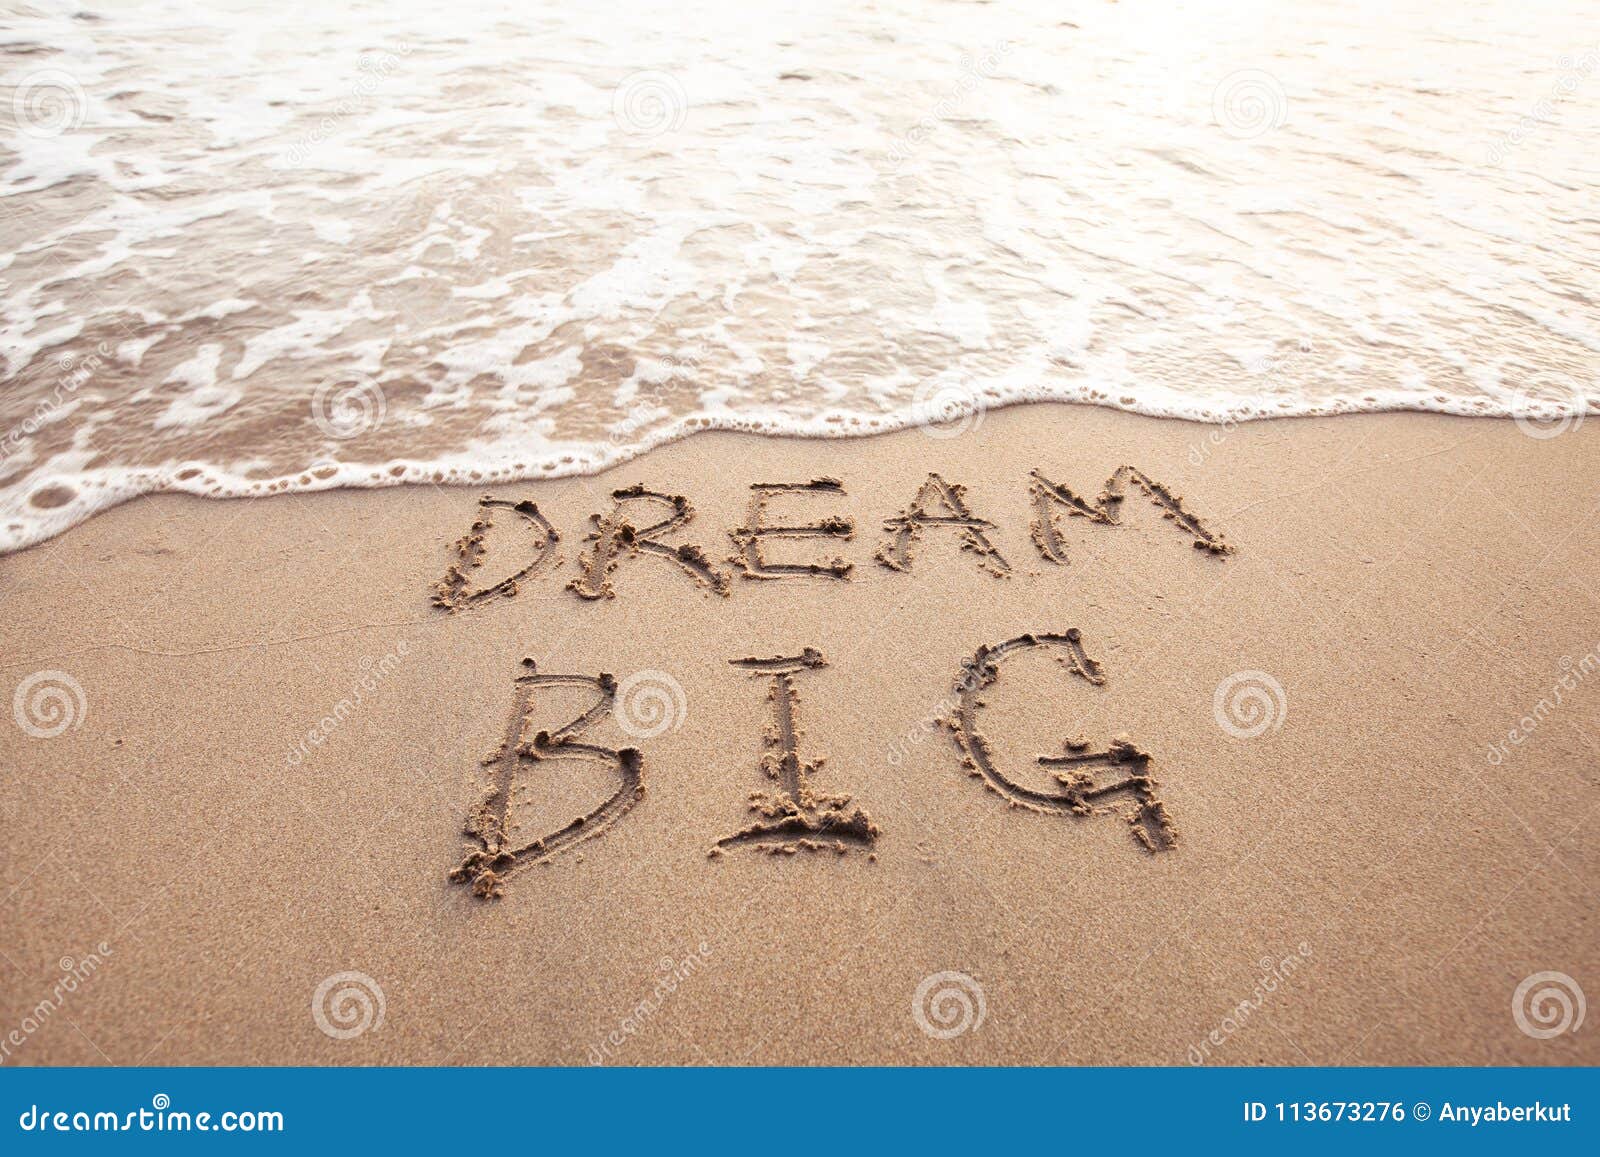 dream big, motivational sign